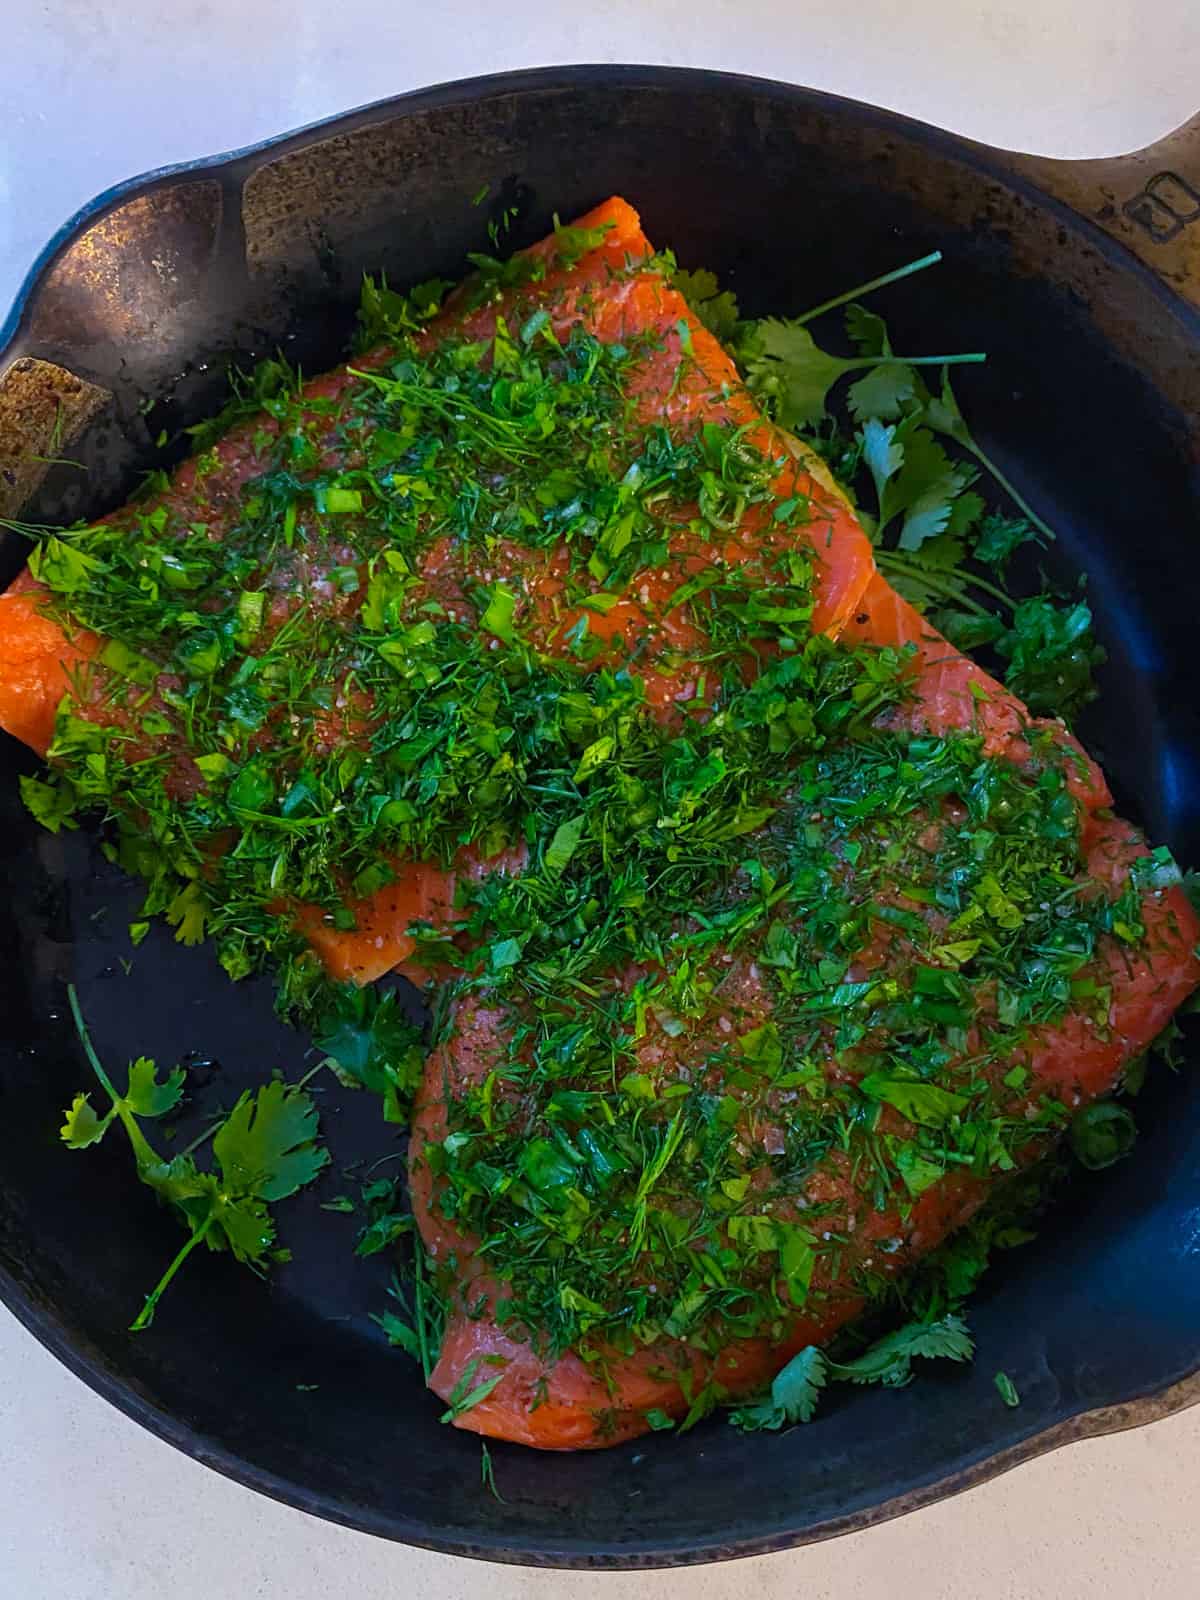 Press the fresh herbs onto the salmon filet so the herbs stick to the fish easily.